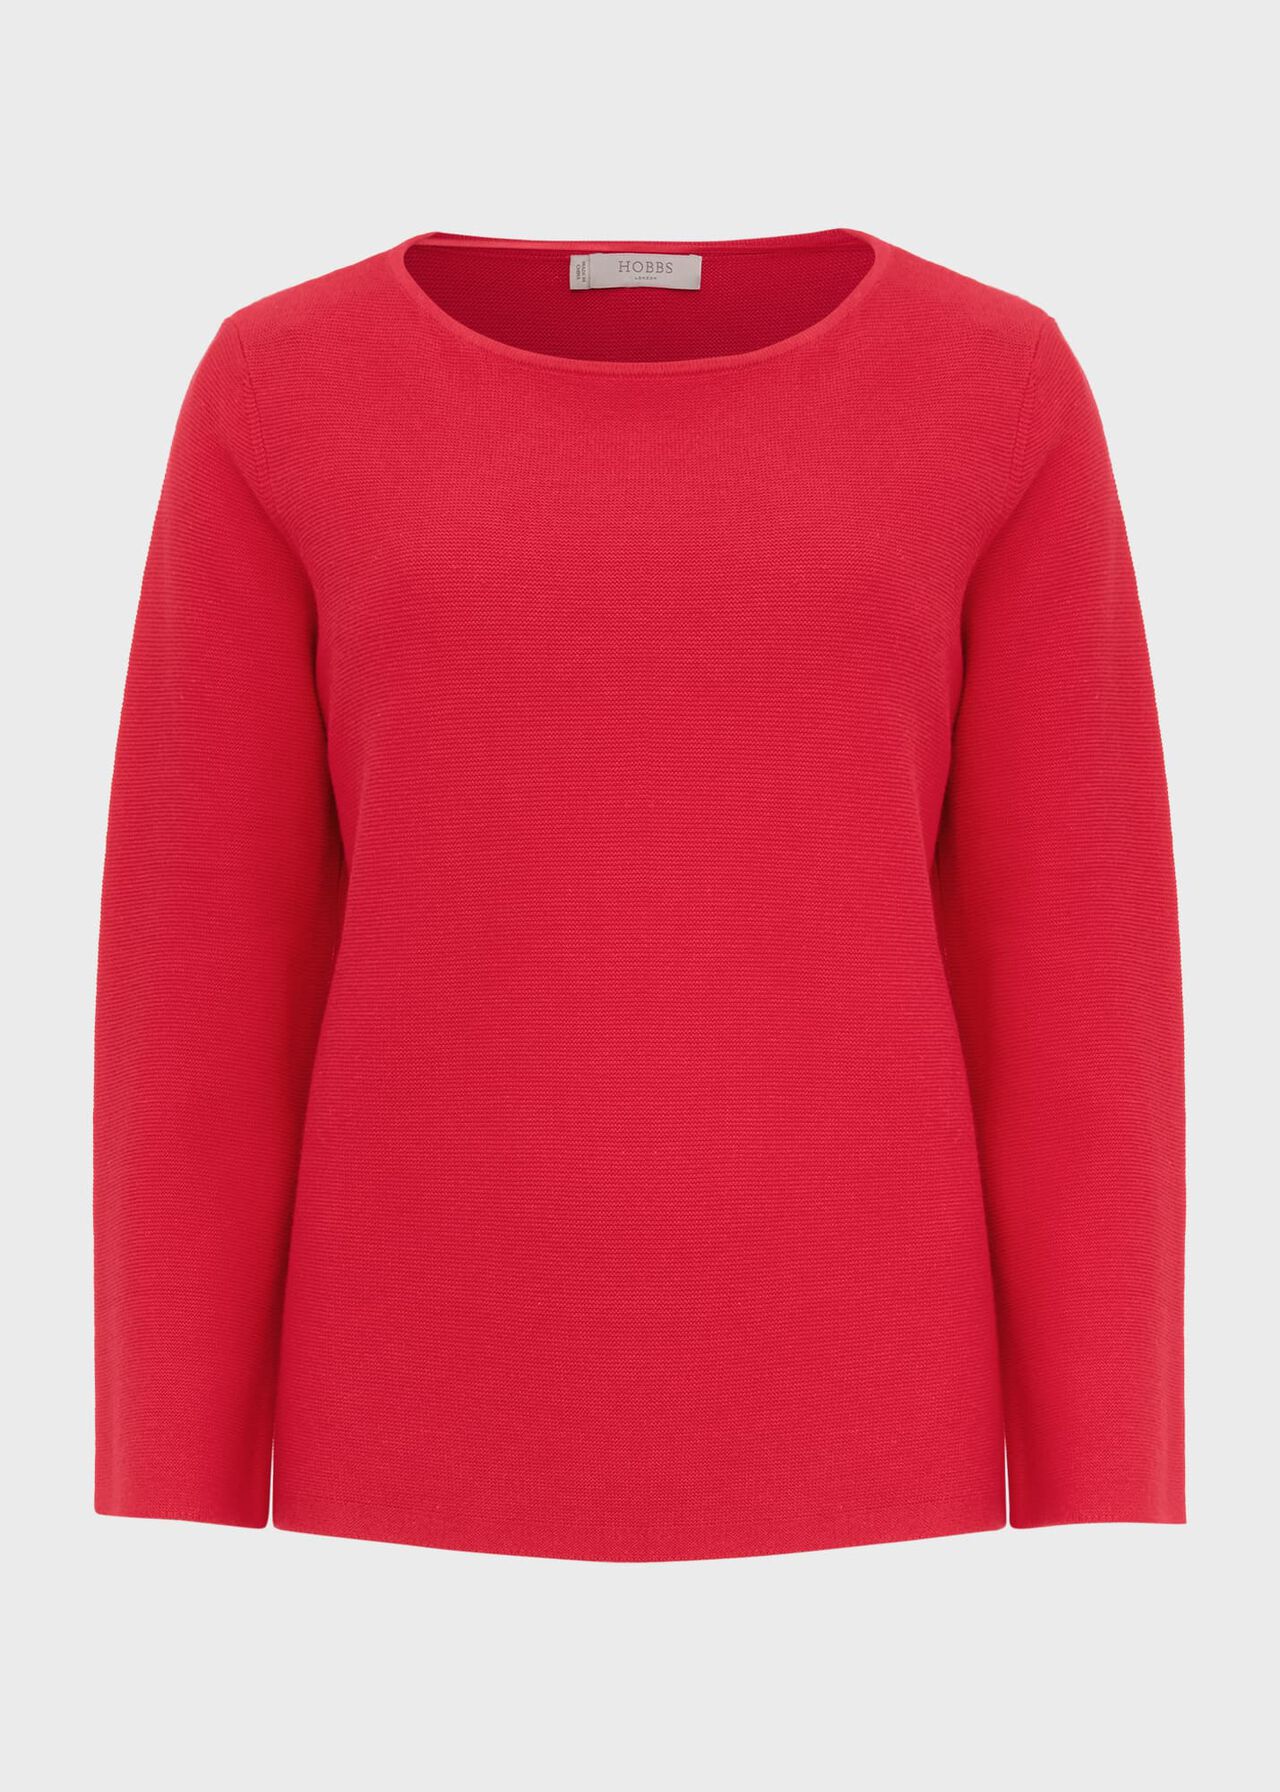 Beatrice Cotton Sweater, Magenta Pink, hi-res